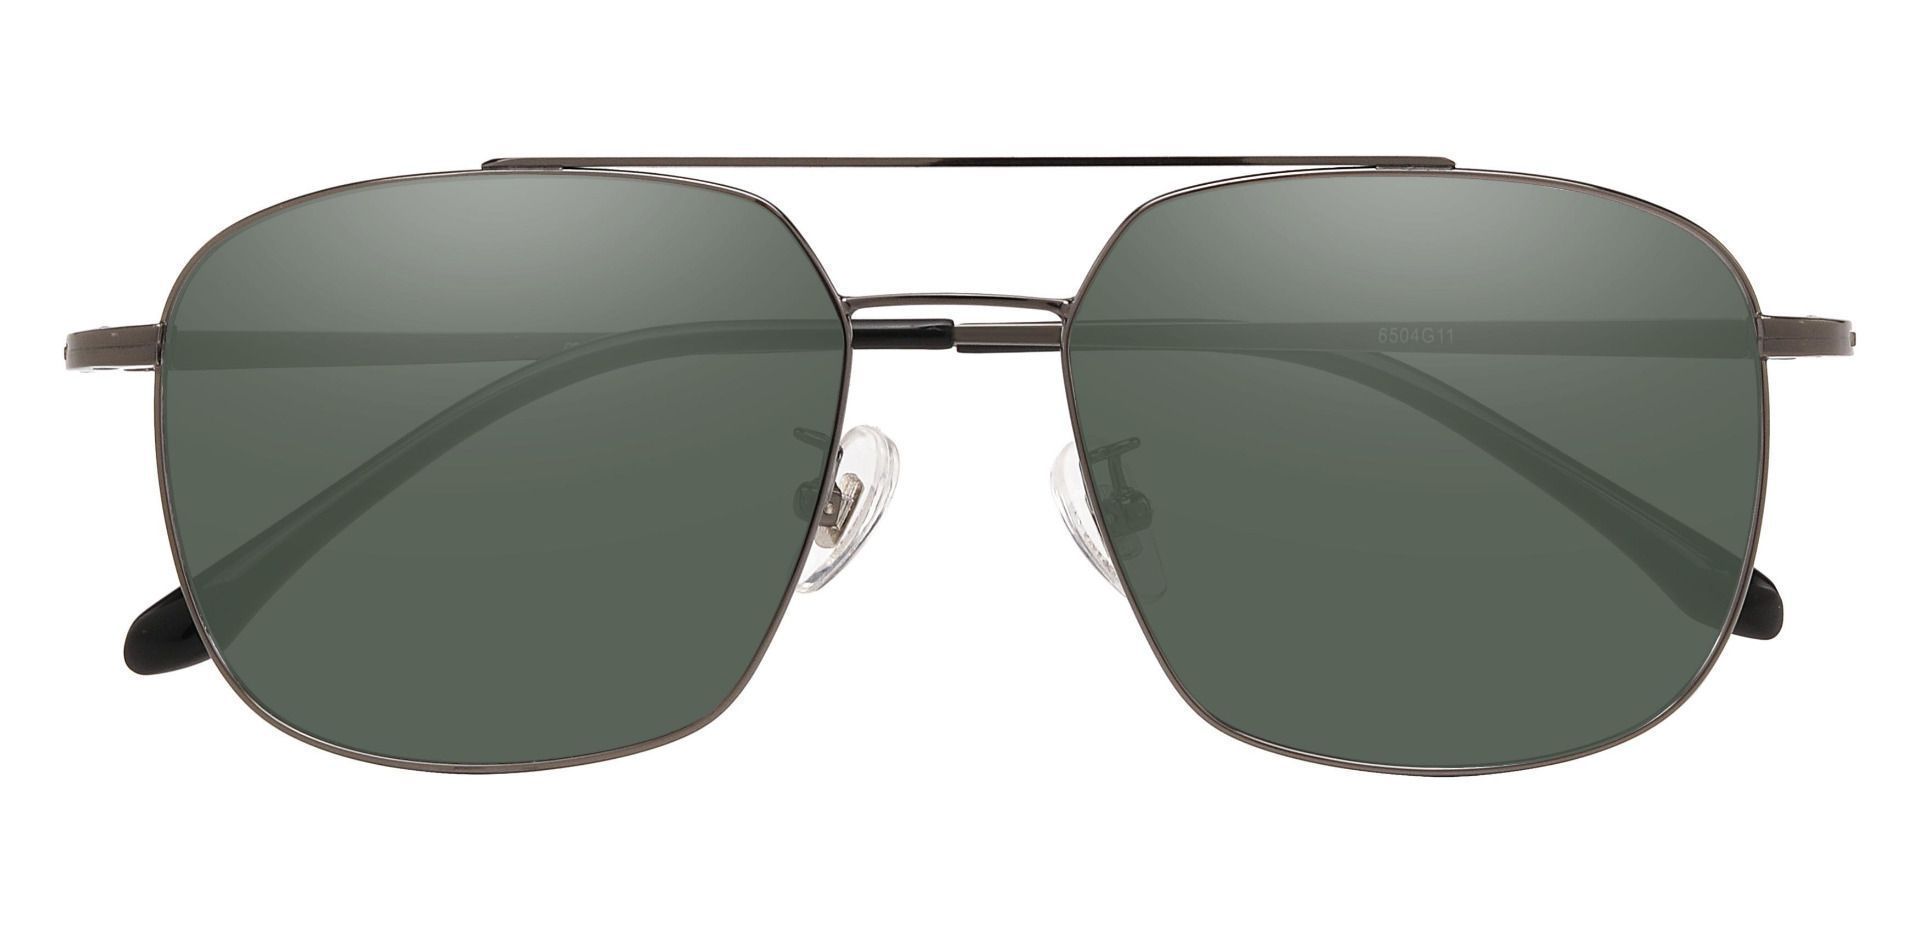 Trevor Aviator Prescription Sunglasses - Gray Frame With Green Lenses